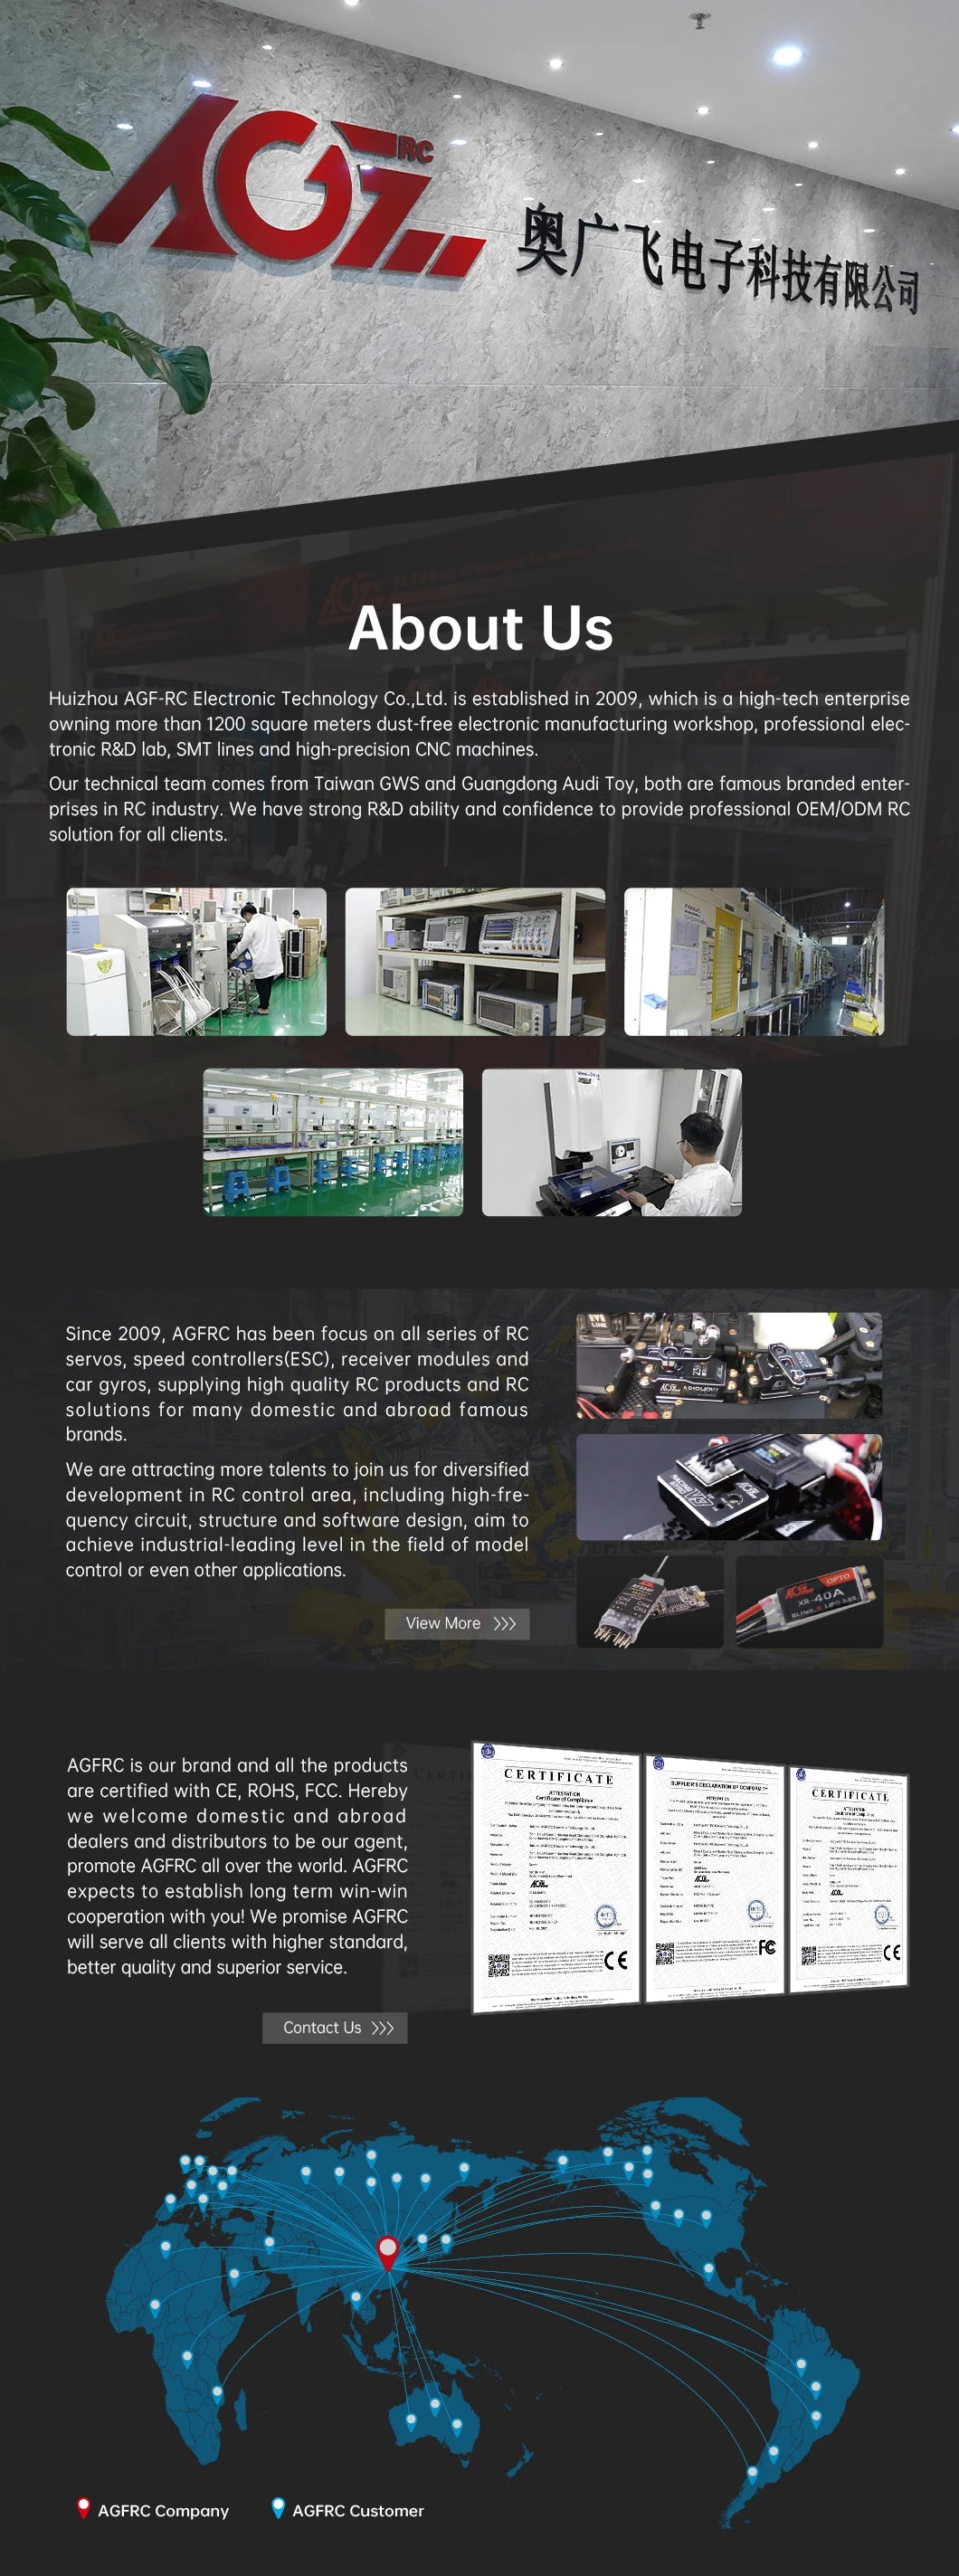 AGFRC B53DHN, Huizhou AGF-RC Electronic Technology Co-,Ltd. is a